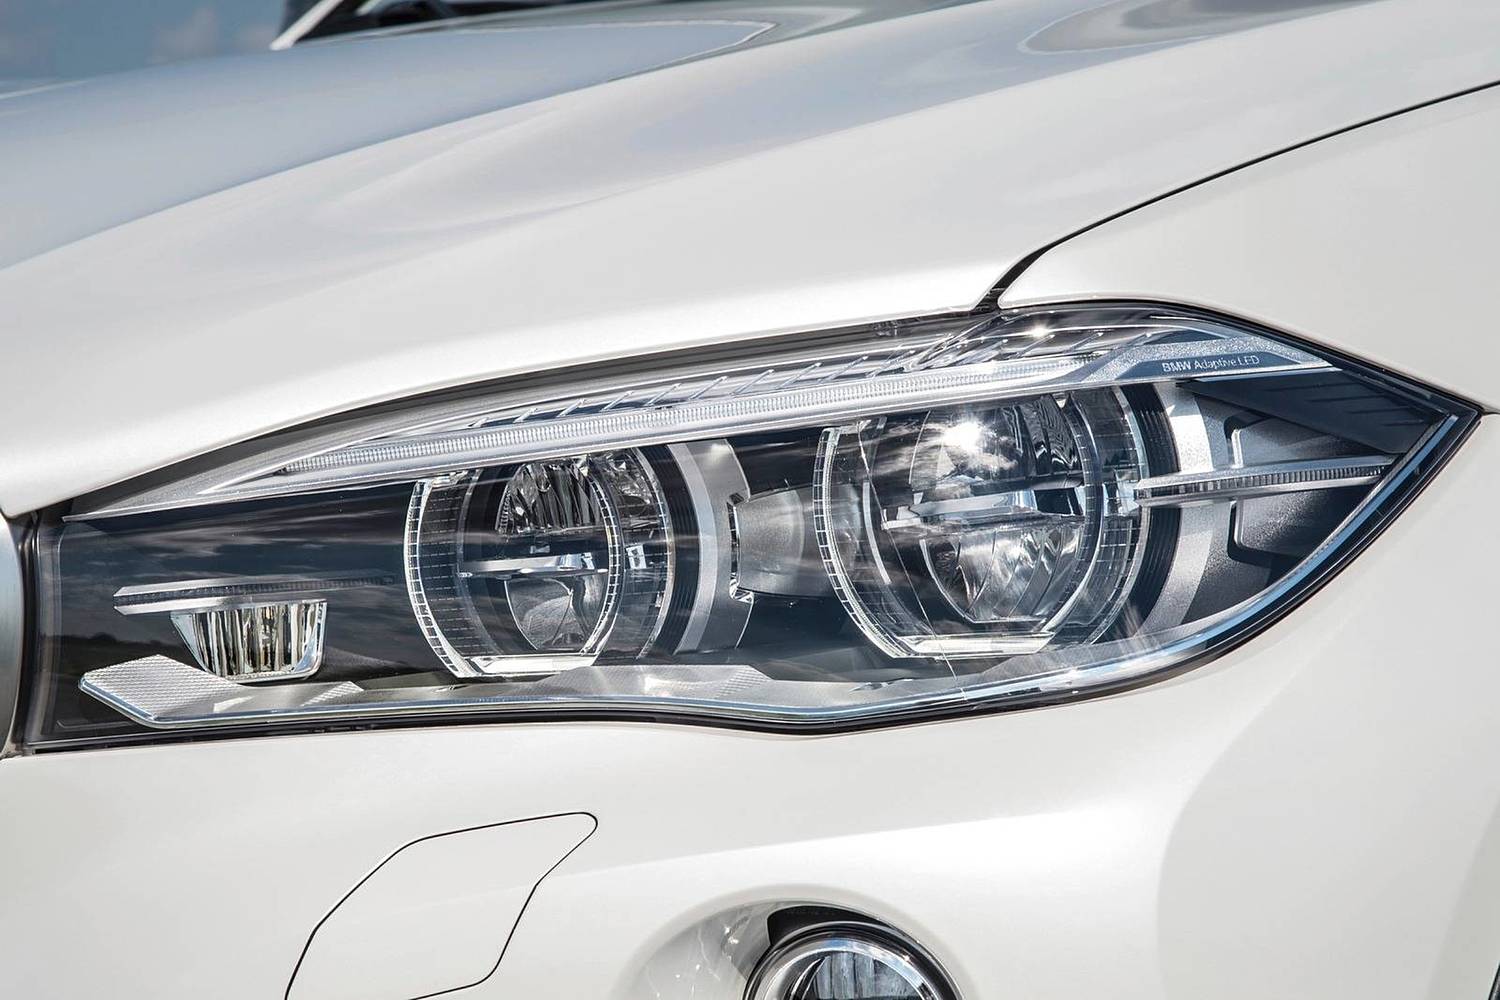 BMW X6 xDrive50i 4dr SUV Headlamp Detail (2016 model year shown)